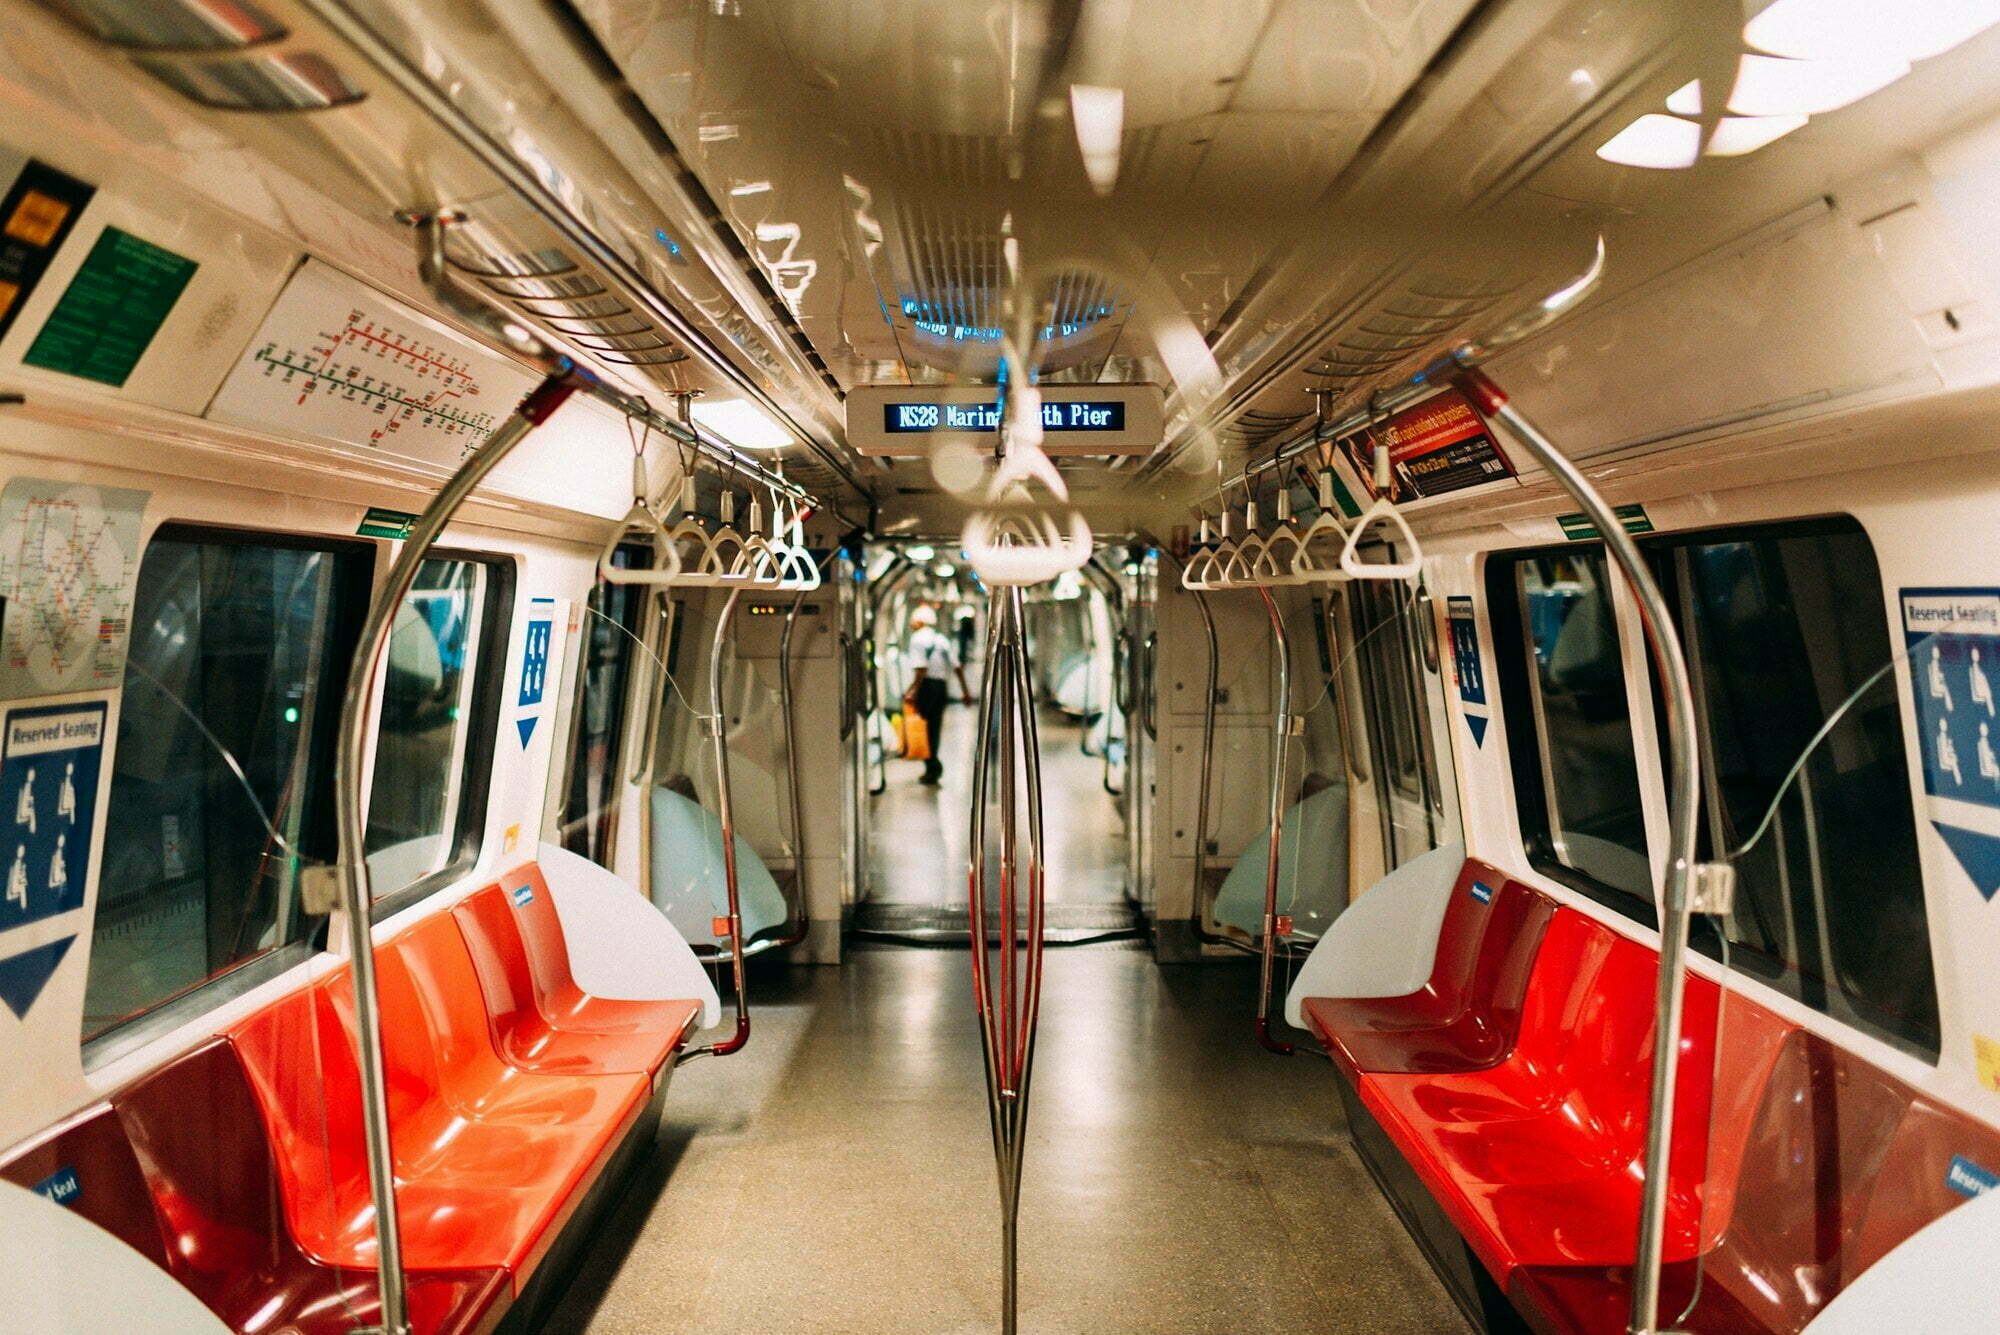 Symmetry on Mass Rapid Transit (MRT) train in Singapore.